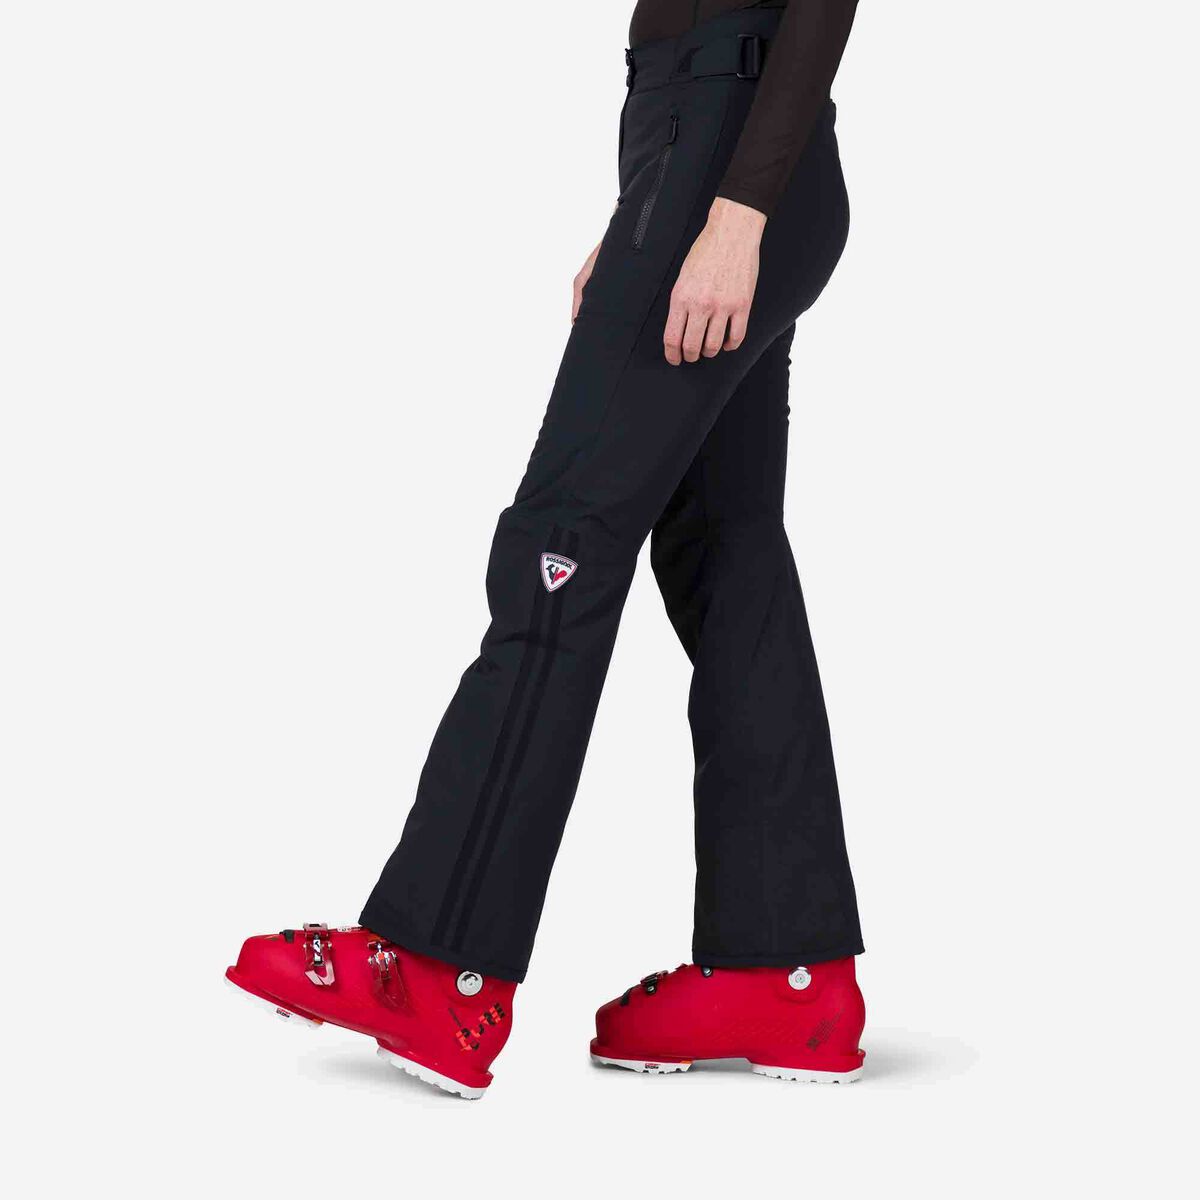 Pantalon de ski Strato femme